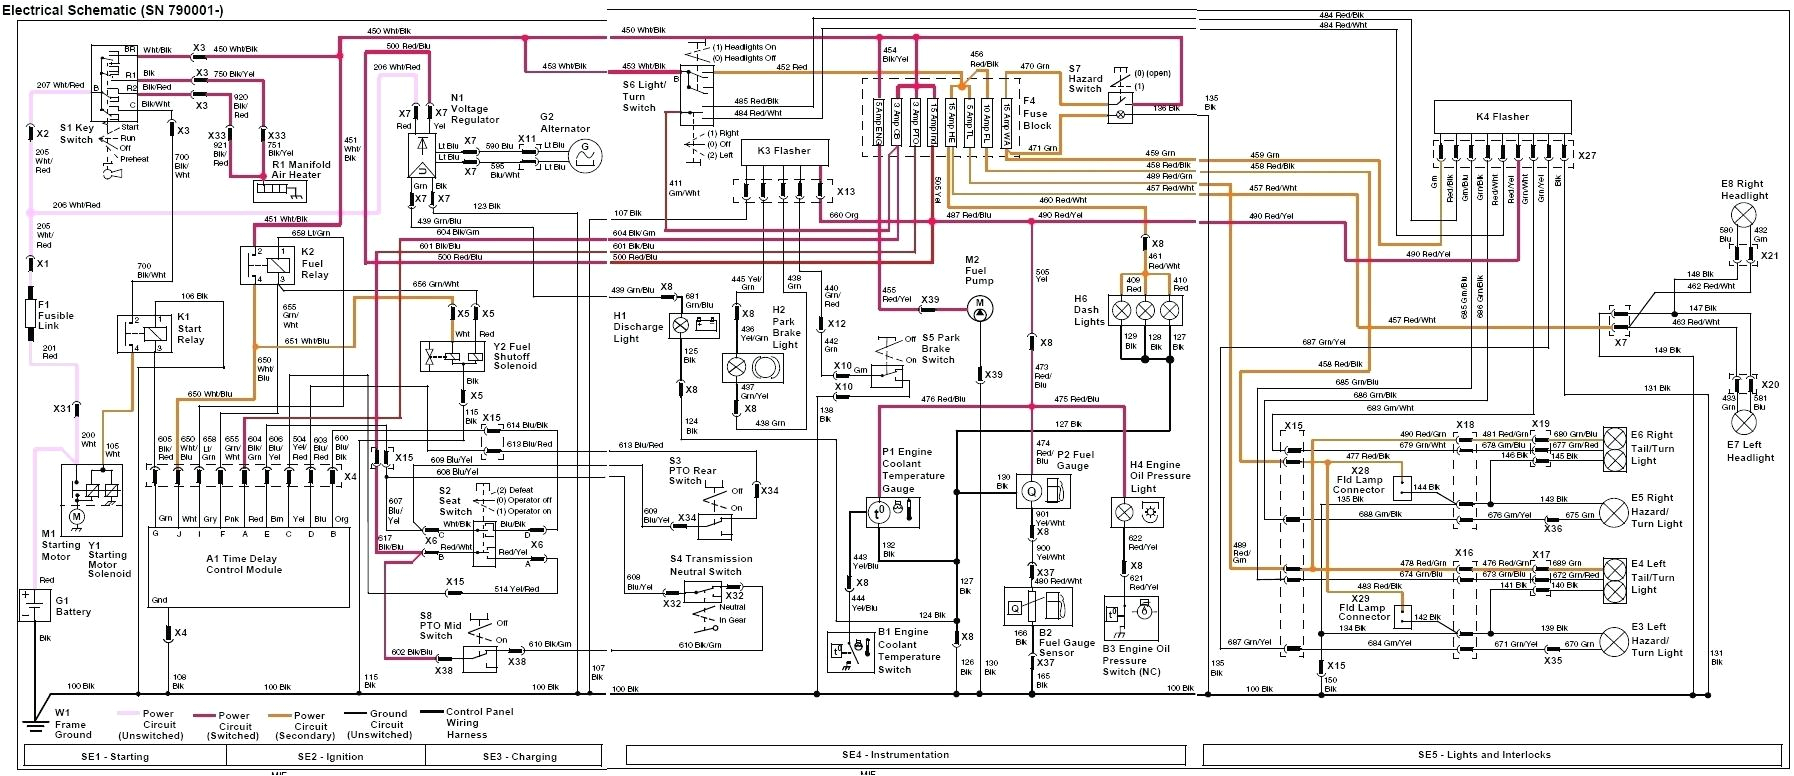 john deere 5303 wiring schematic circuit diagram wiring diagram john deere 5103 wiring schematic john deere 5103 wiring diagram